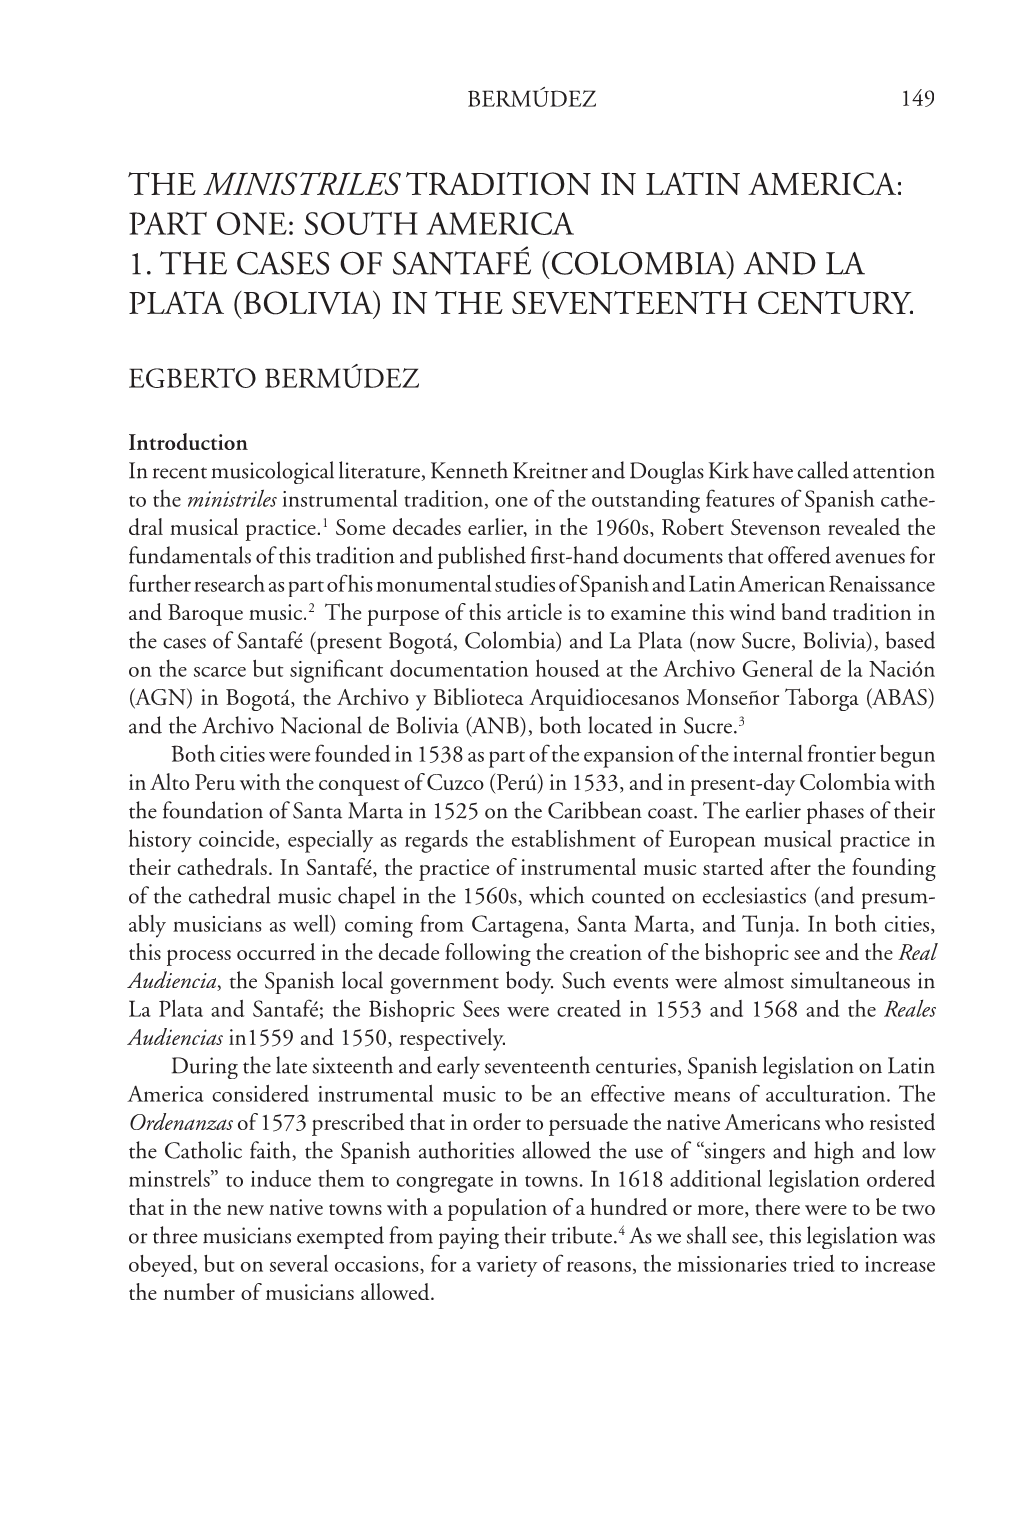 South America 1. the Cases of Santafé (Colombia) and La Plata (Bolivia) in the Seventeenth Century